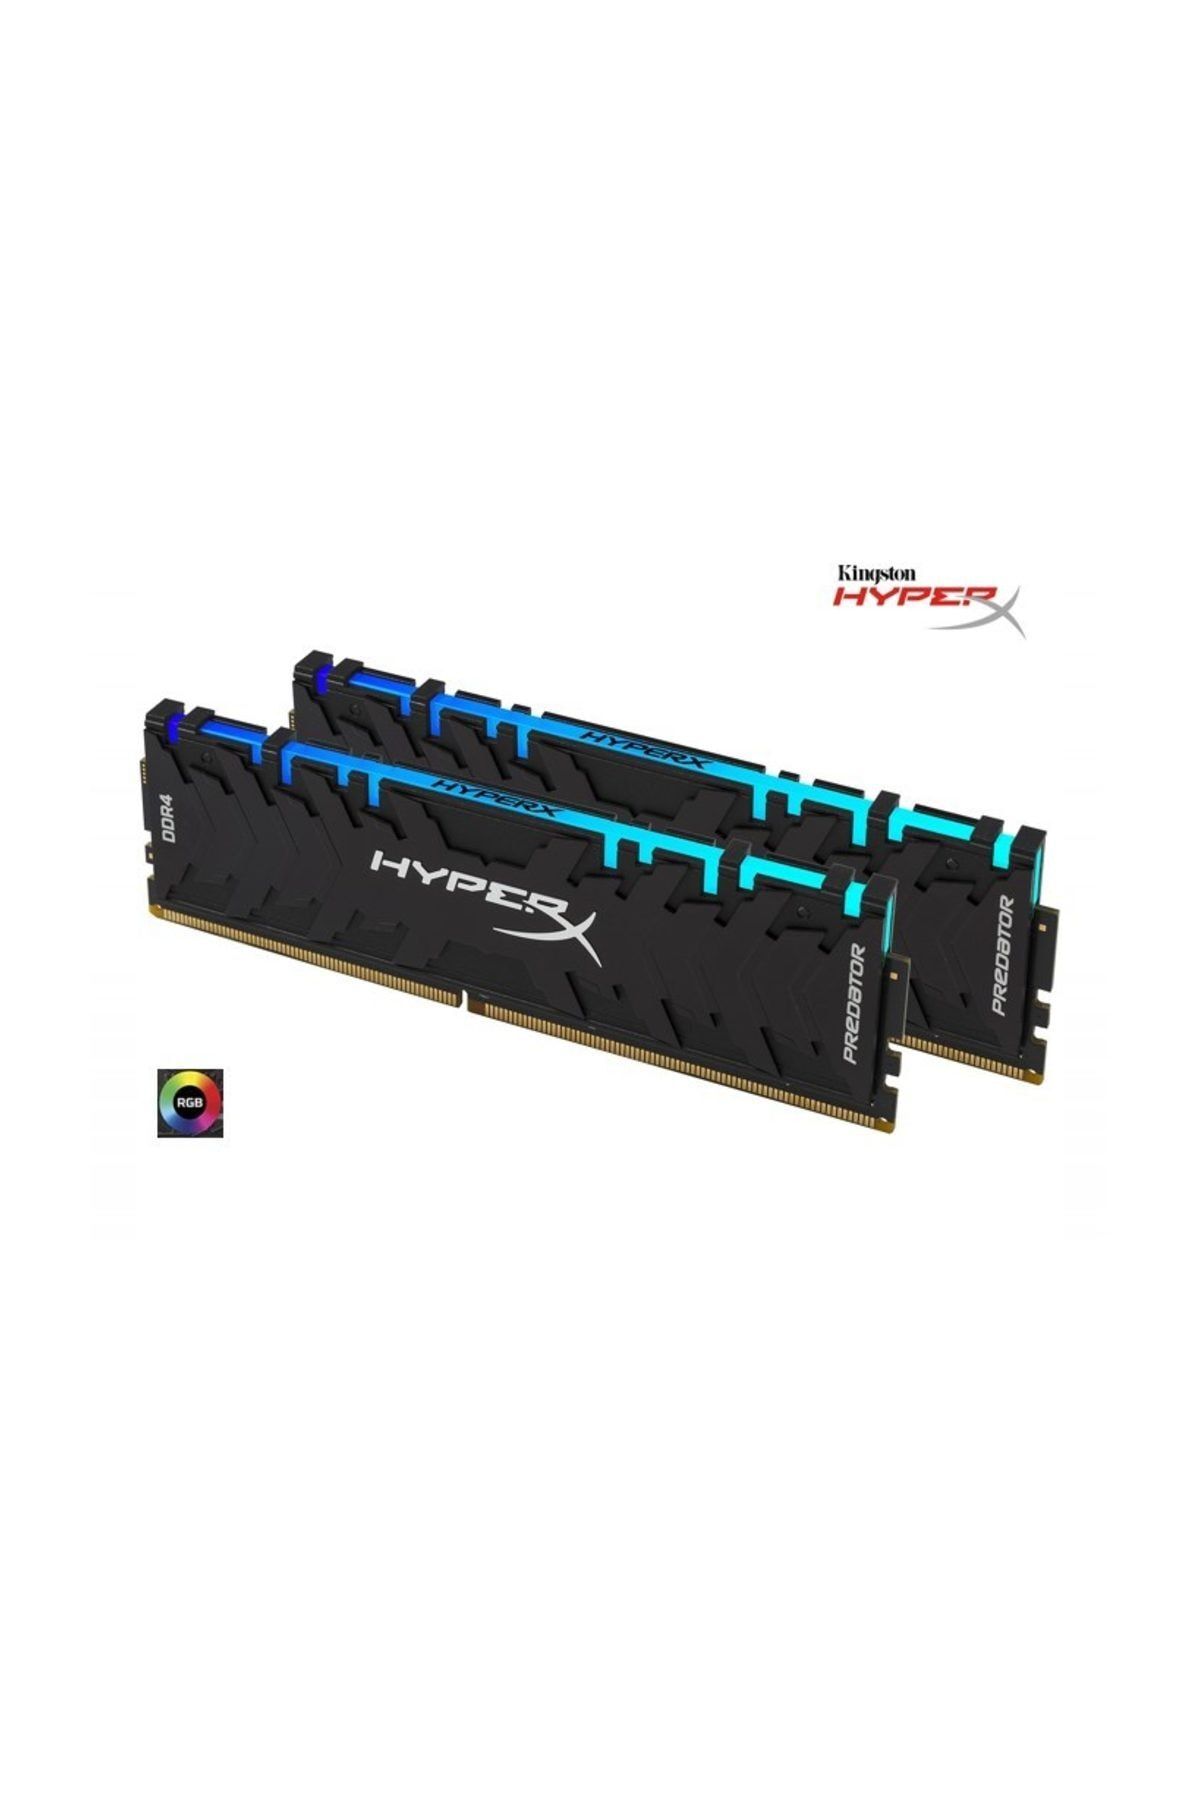 Kingston HyperX Predator RGB 16GB (2x8GB) HX432C16PB3AK2/16 DDR4 3200MHz CL16 Bellek